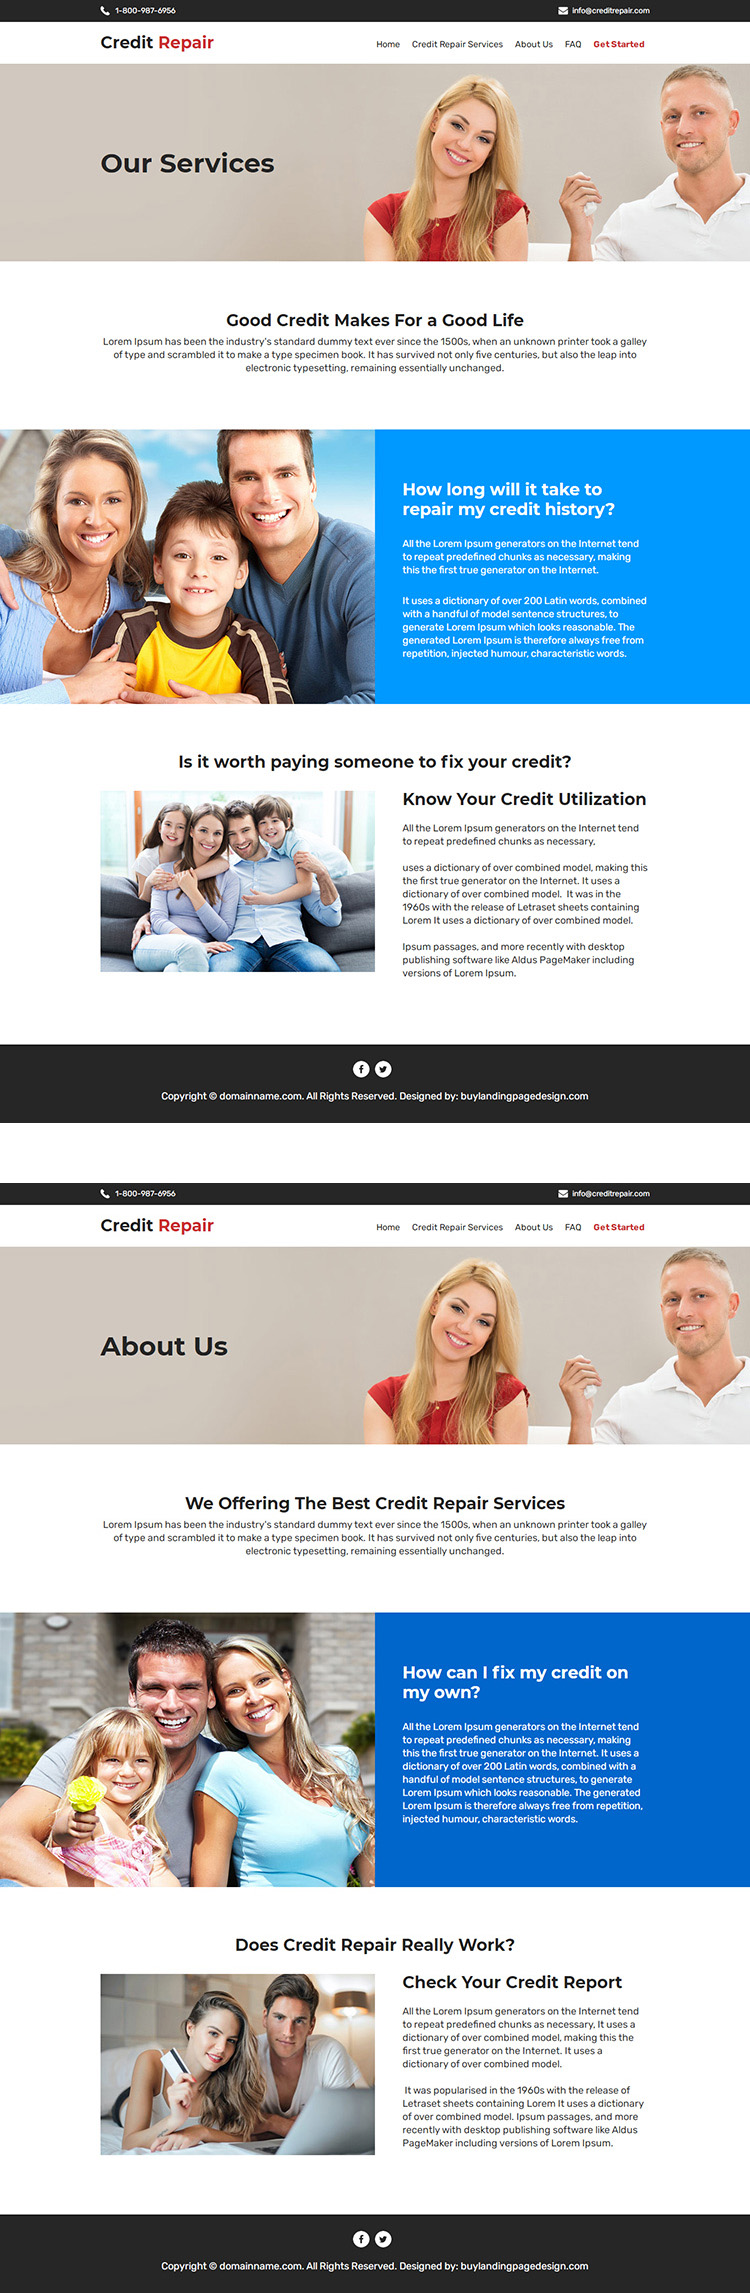 credit repair companies professional website design